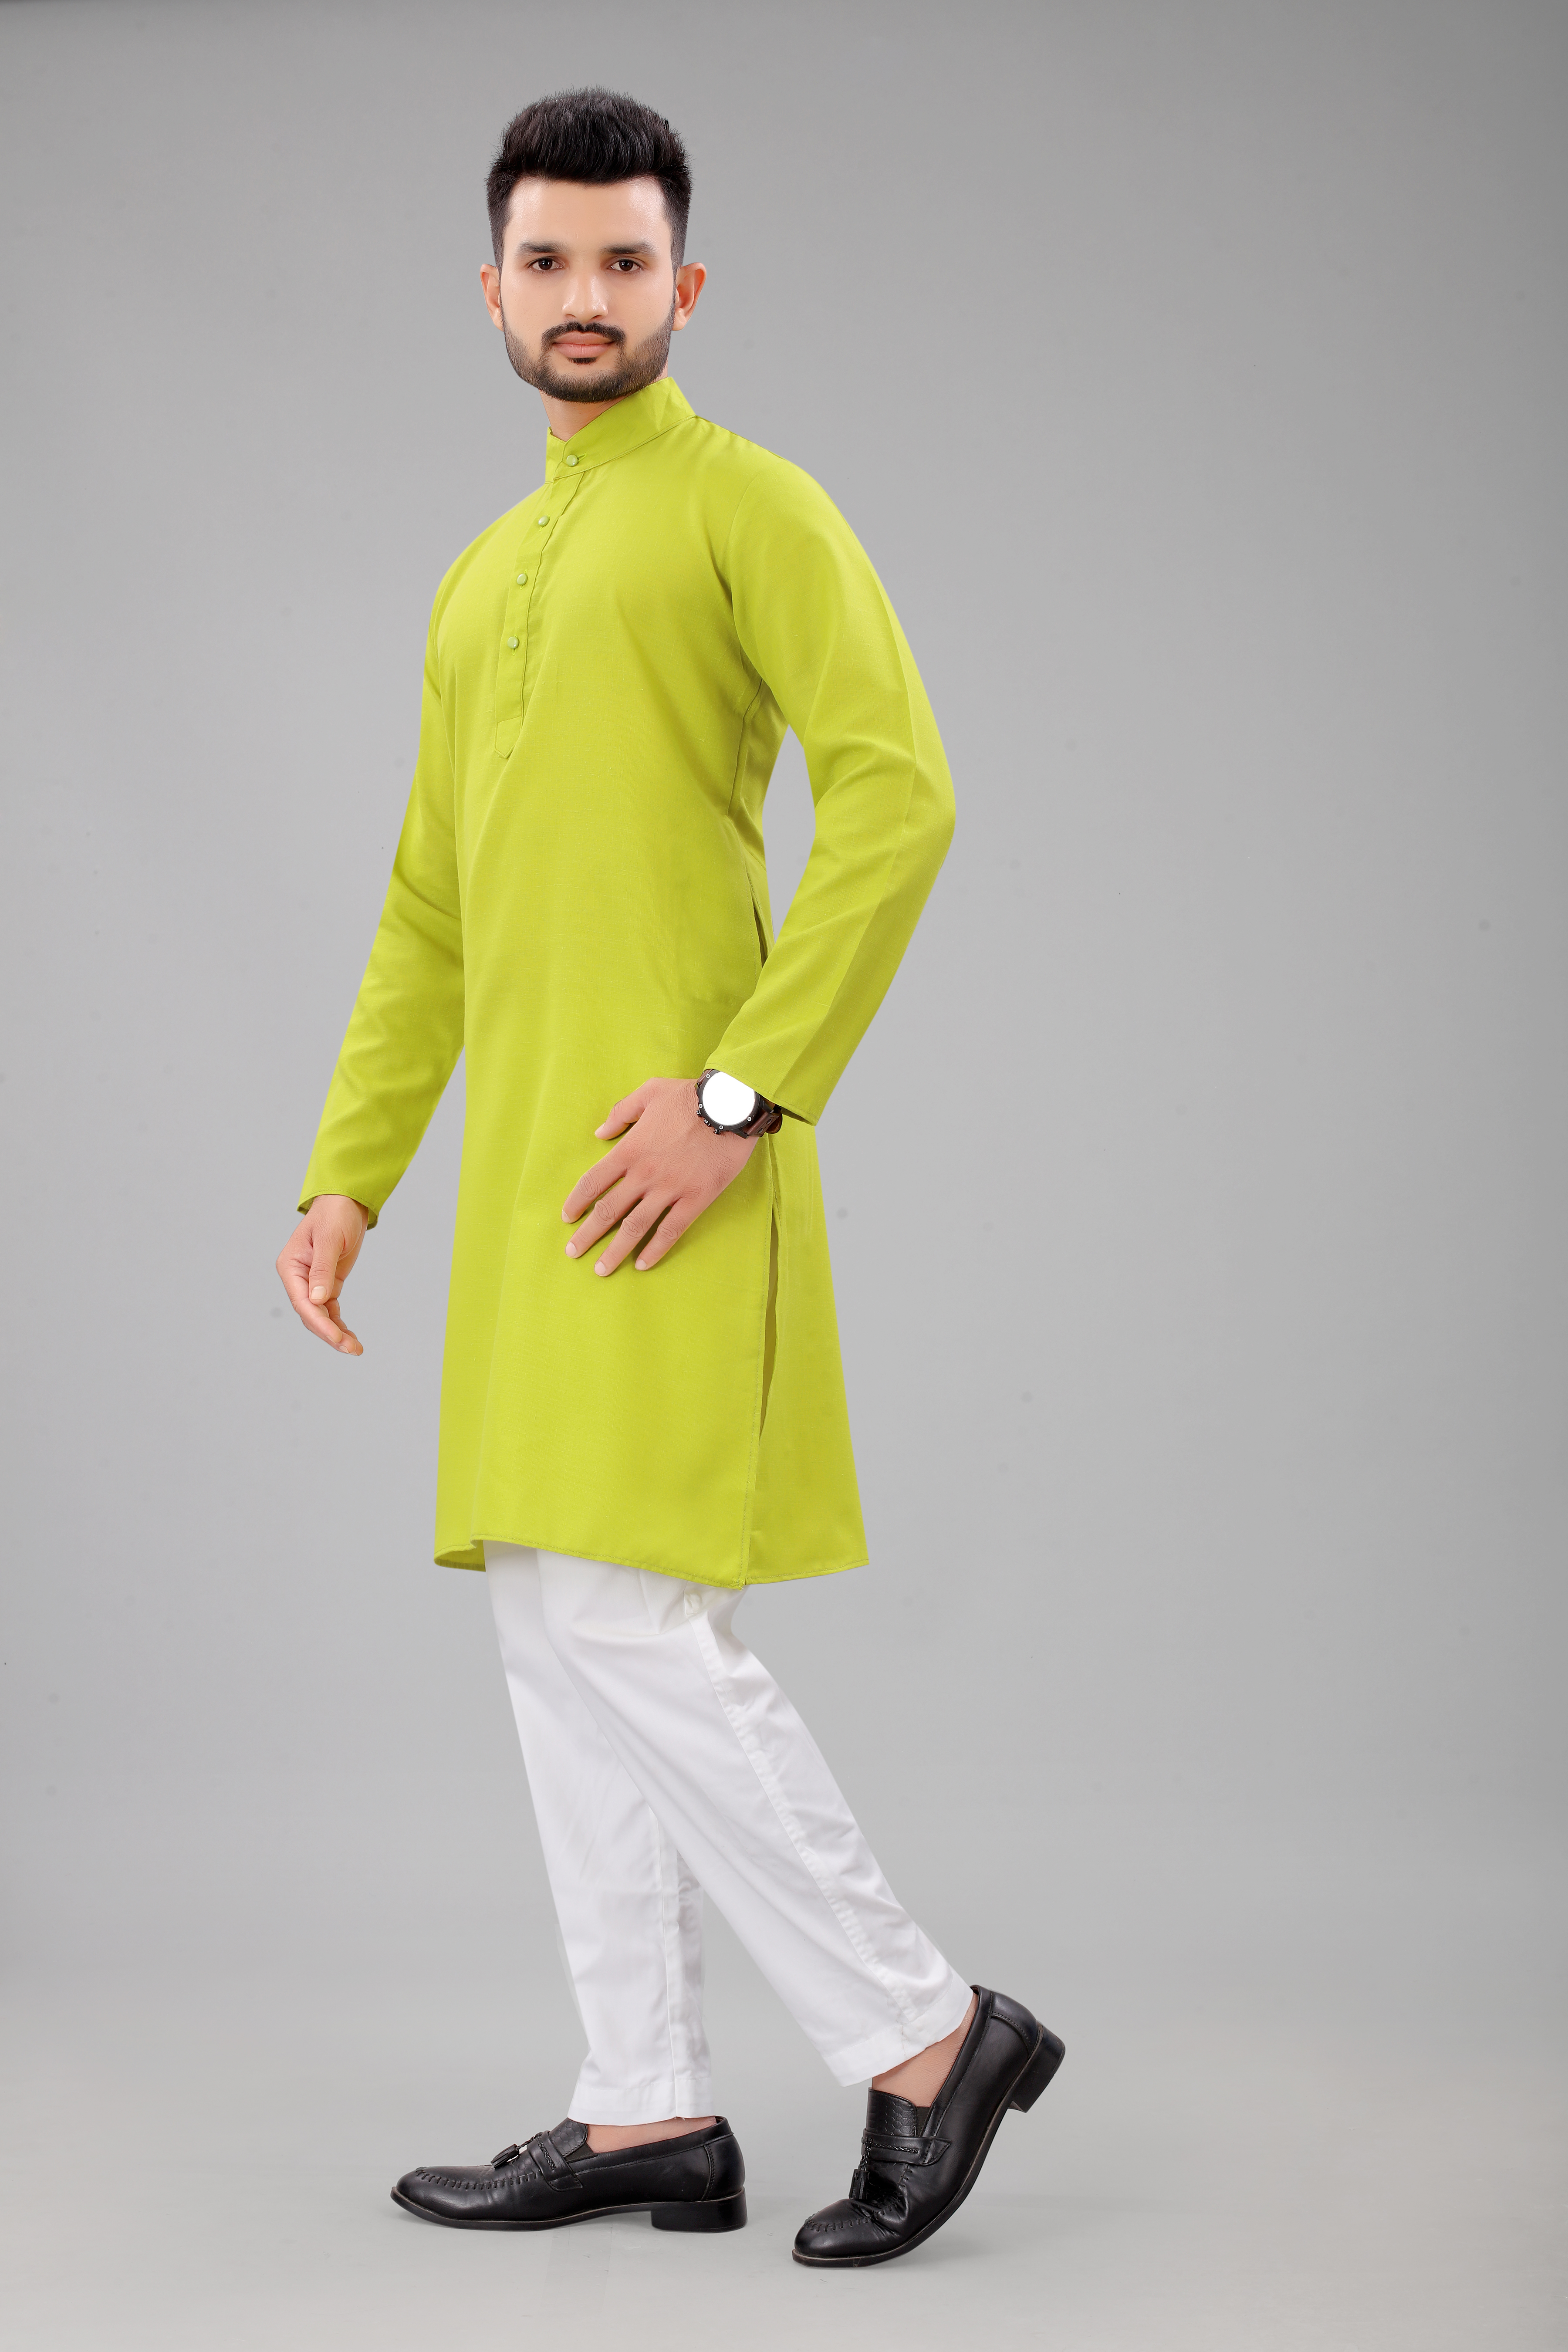 Latest Lemon Yellow Men's  Kurta With White Pajama: Buy Latest Men's Ethnic Wear Online